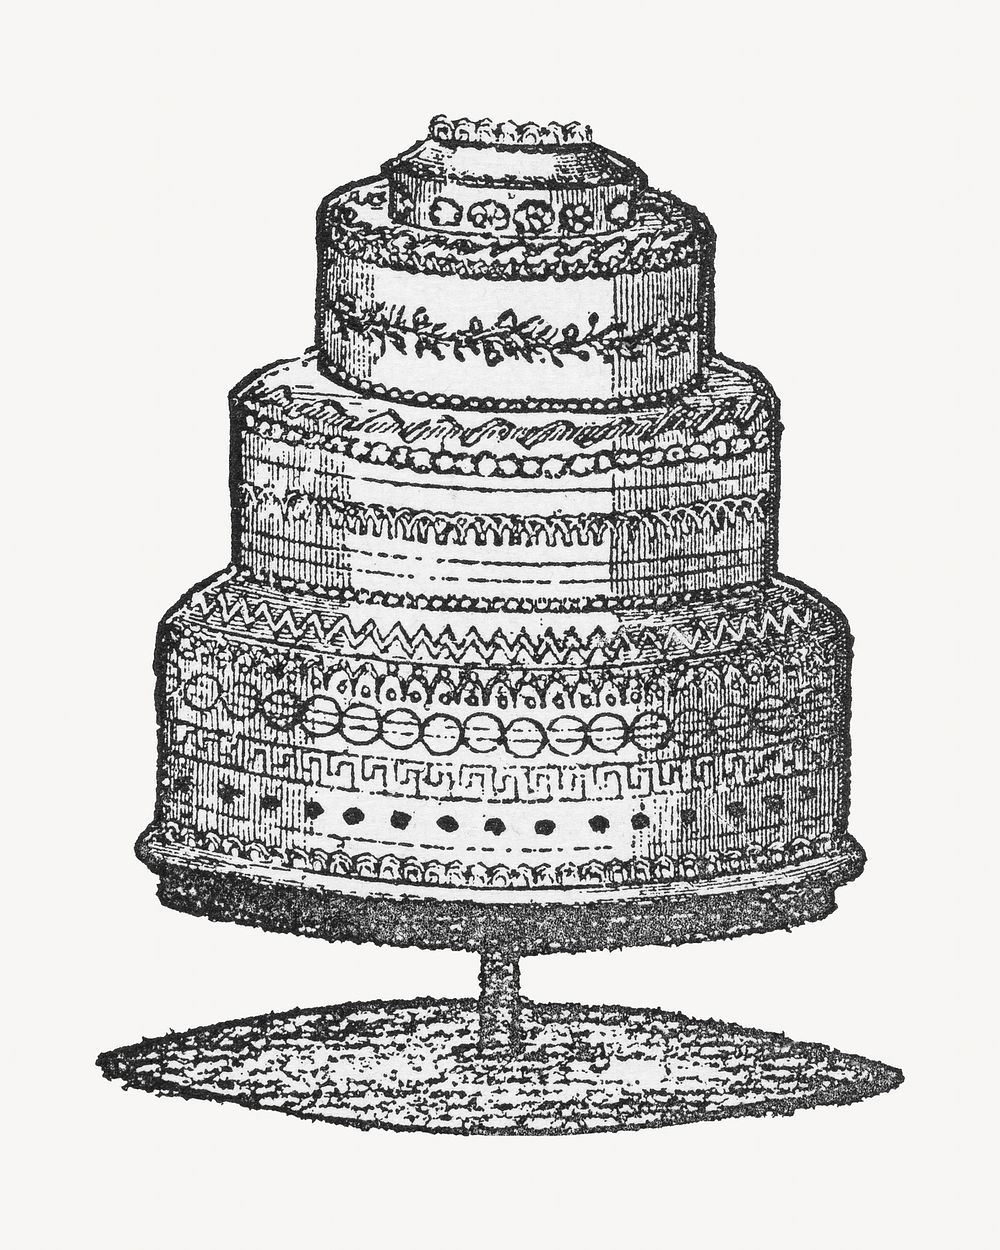 Vintage cake monotone illustration. Remixed by rawpixel. 